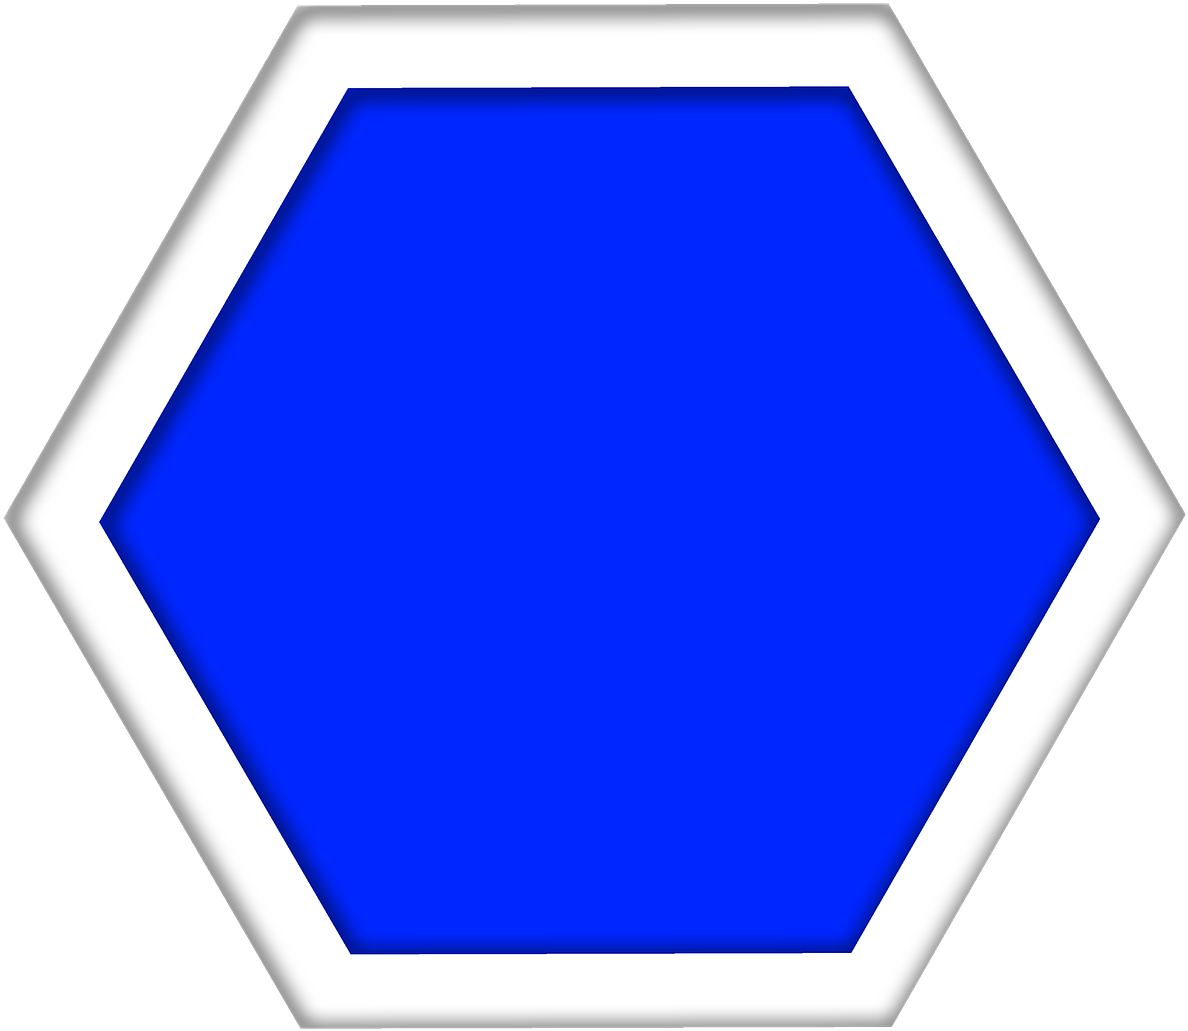 A Blue Hexagon With White Border